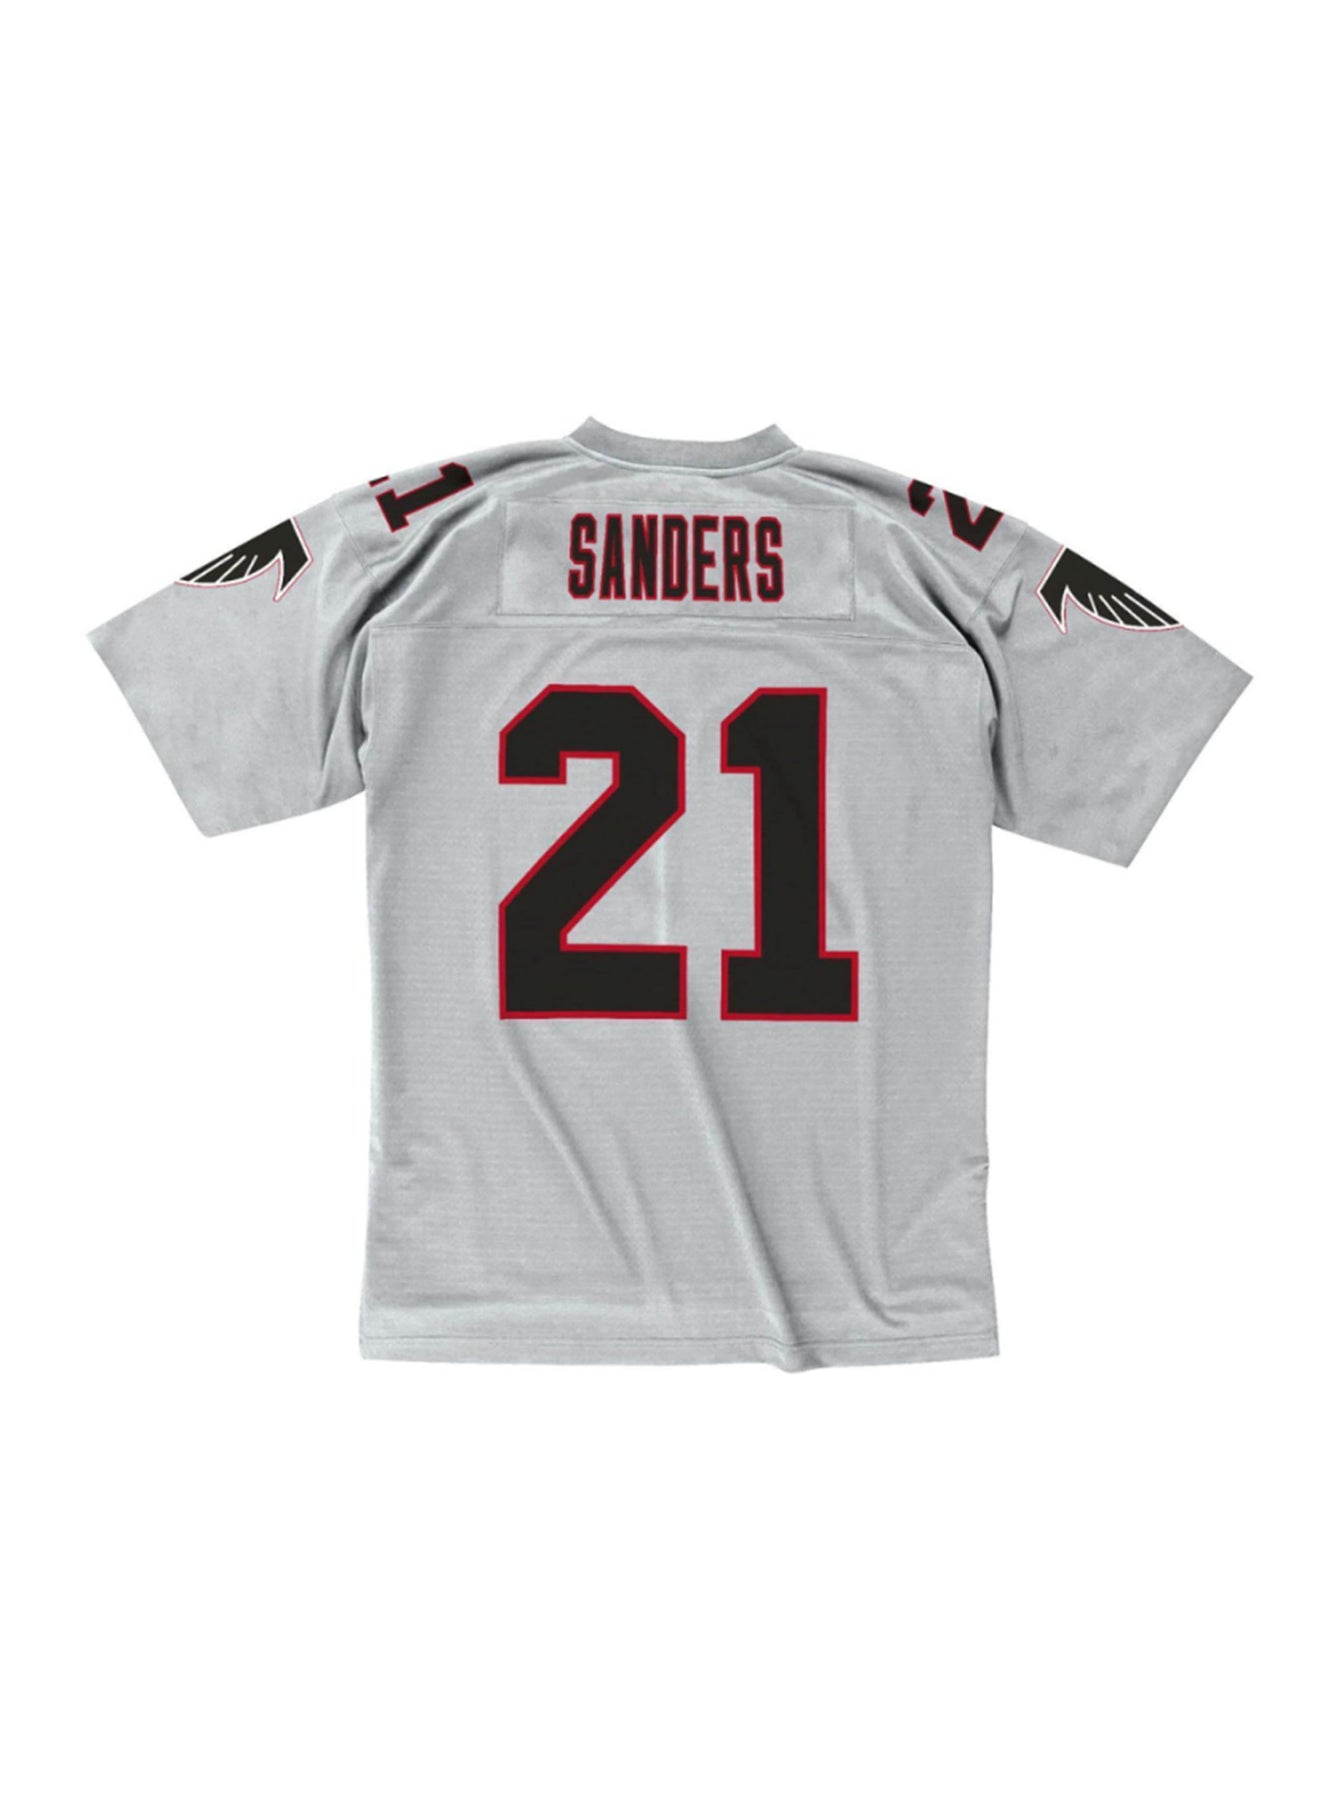 NFL Throwback Jerseys - Atlanta Falcons Deion Sanders & more